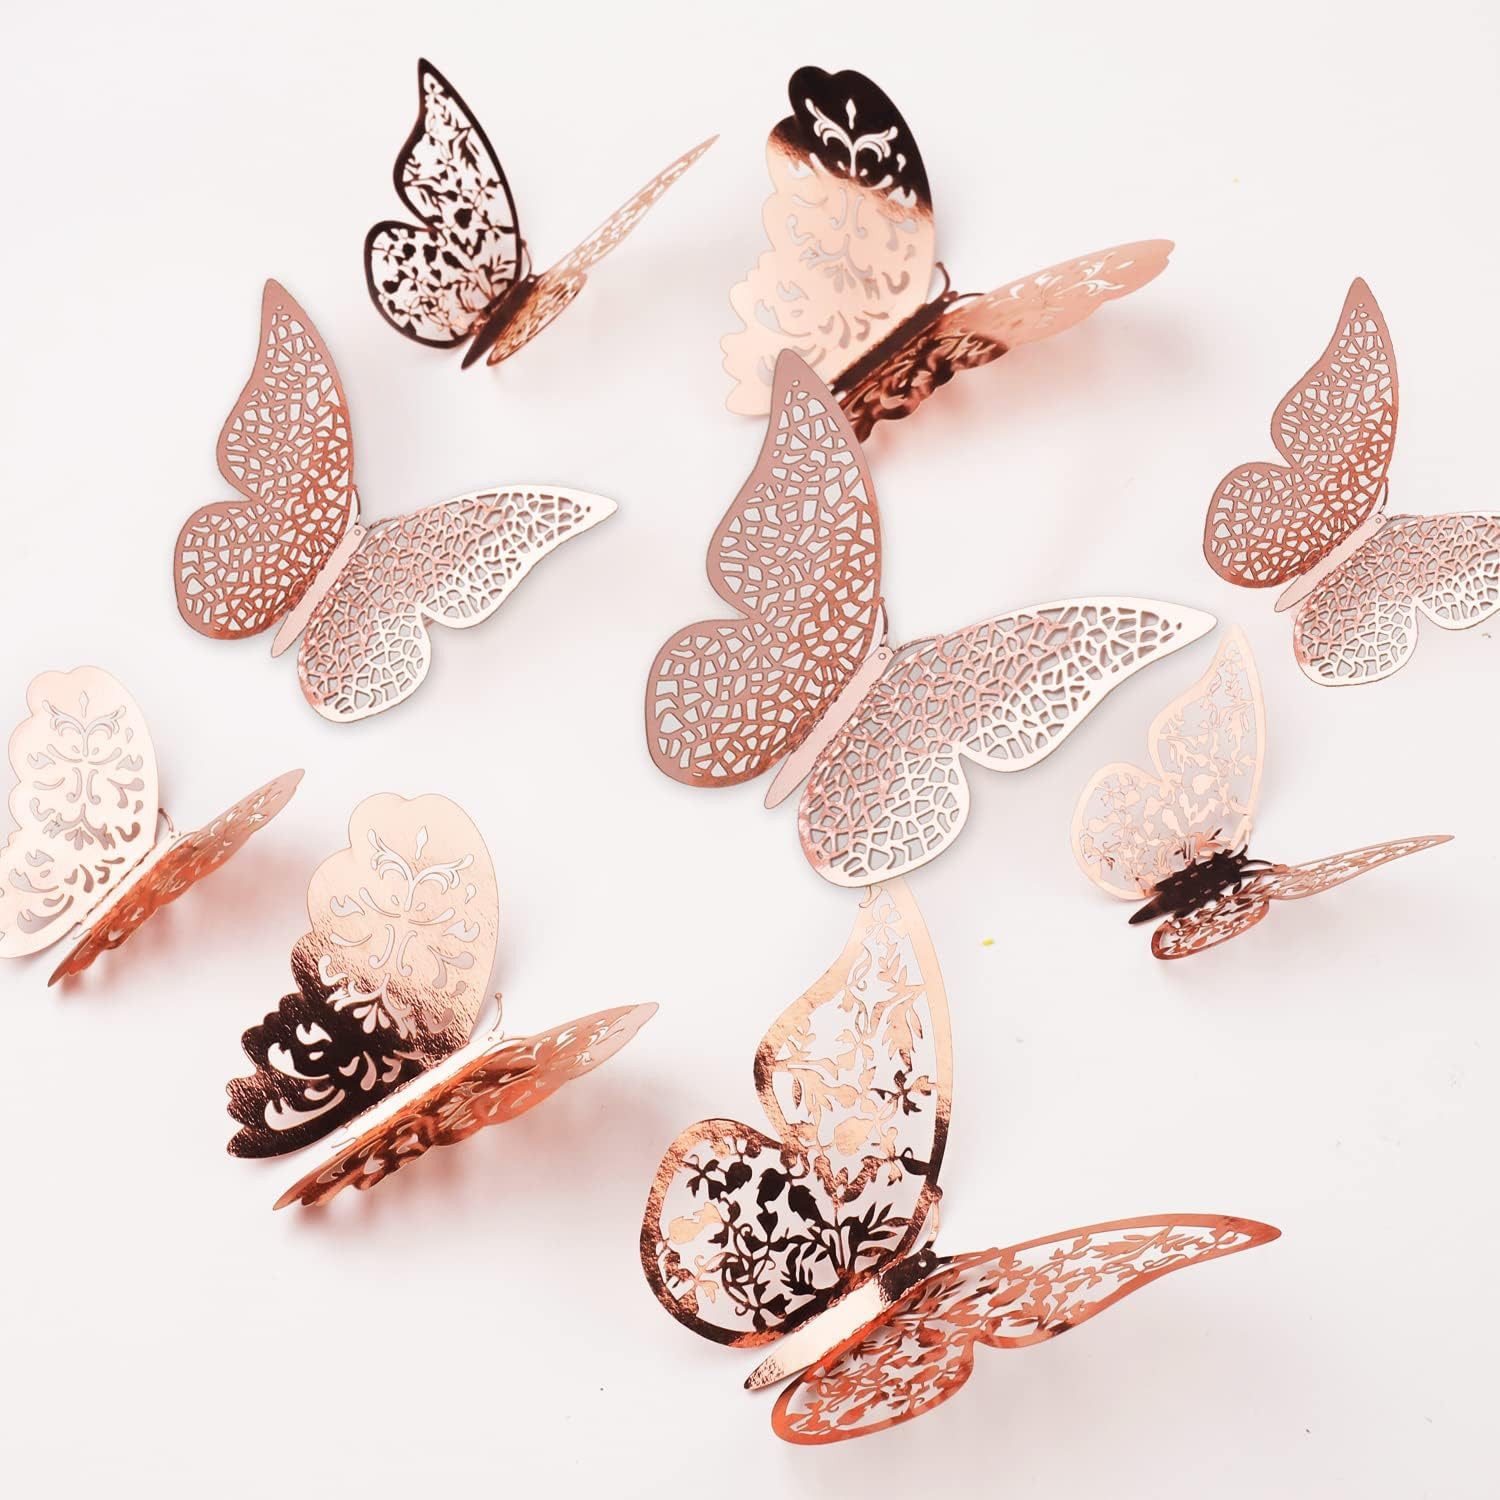 HIBNOPN Wandsticker 3D Schmetterling Wandaufkleber, 36 Stück 3 Arten Schmetterling Deko (36 St)